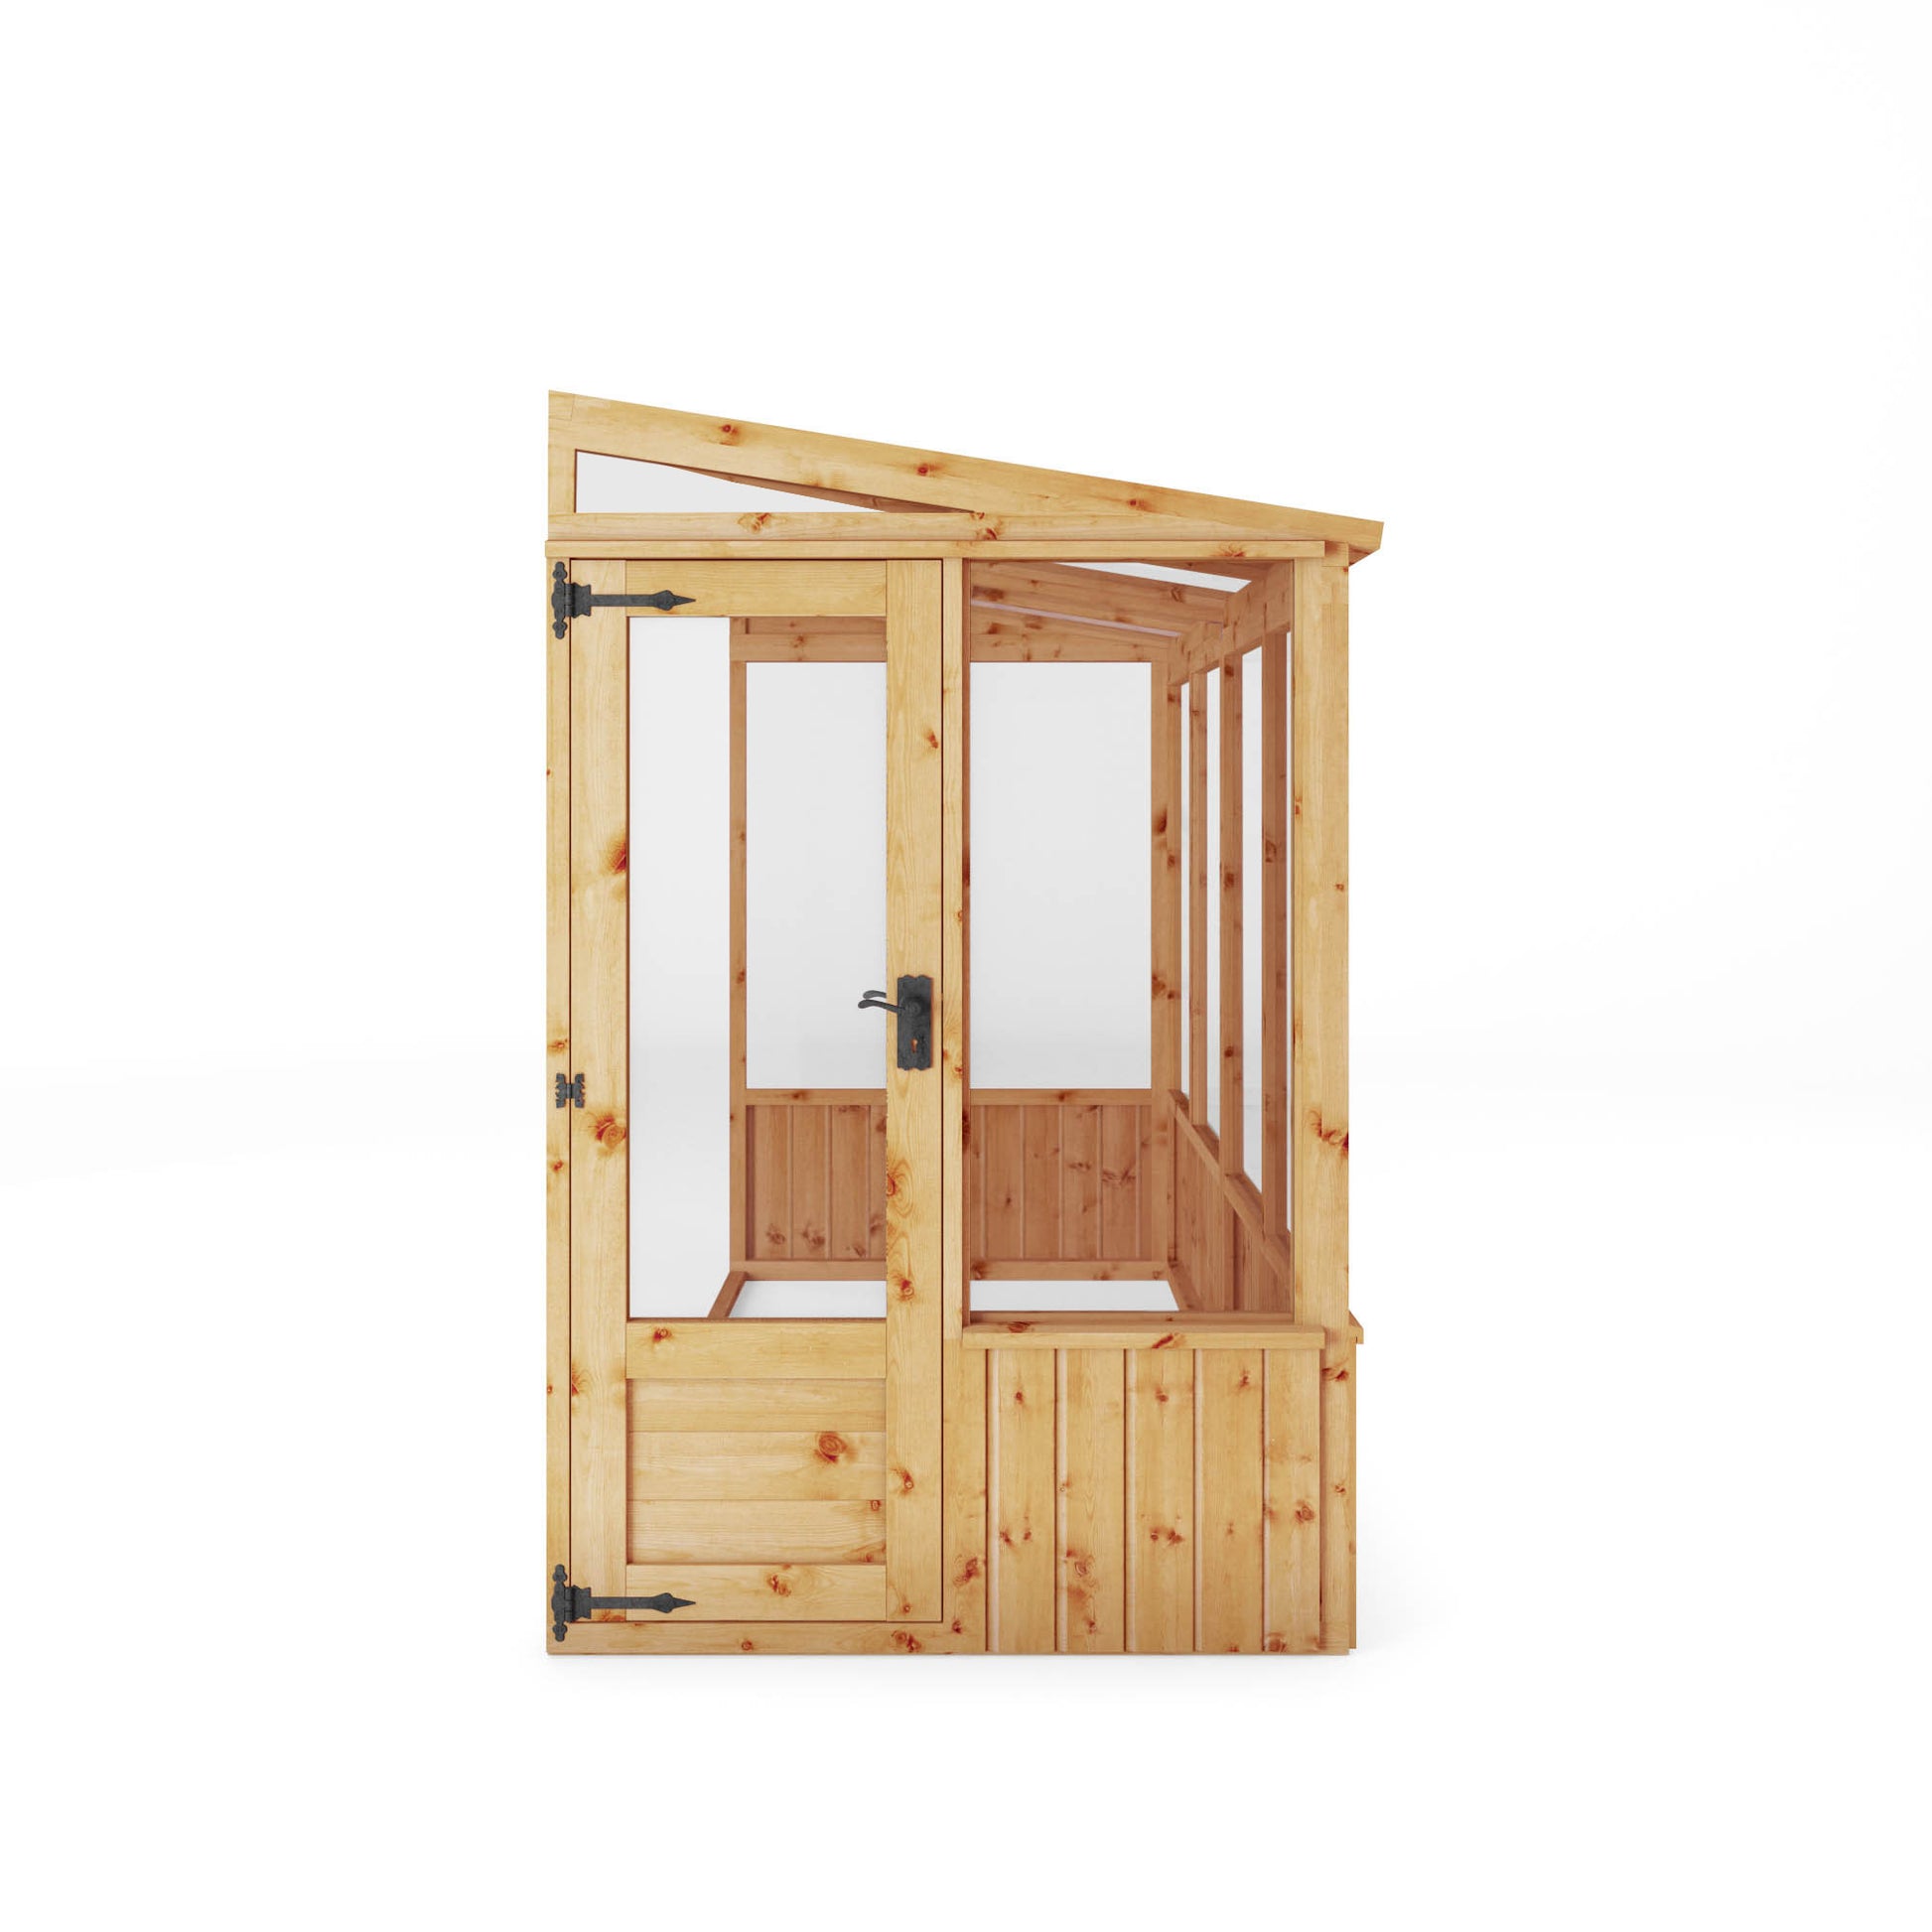 Mercia 8x4 Wooden Lean To Greenhouse - Premium Garden